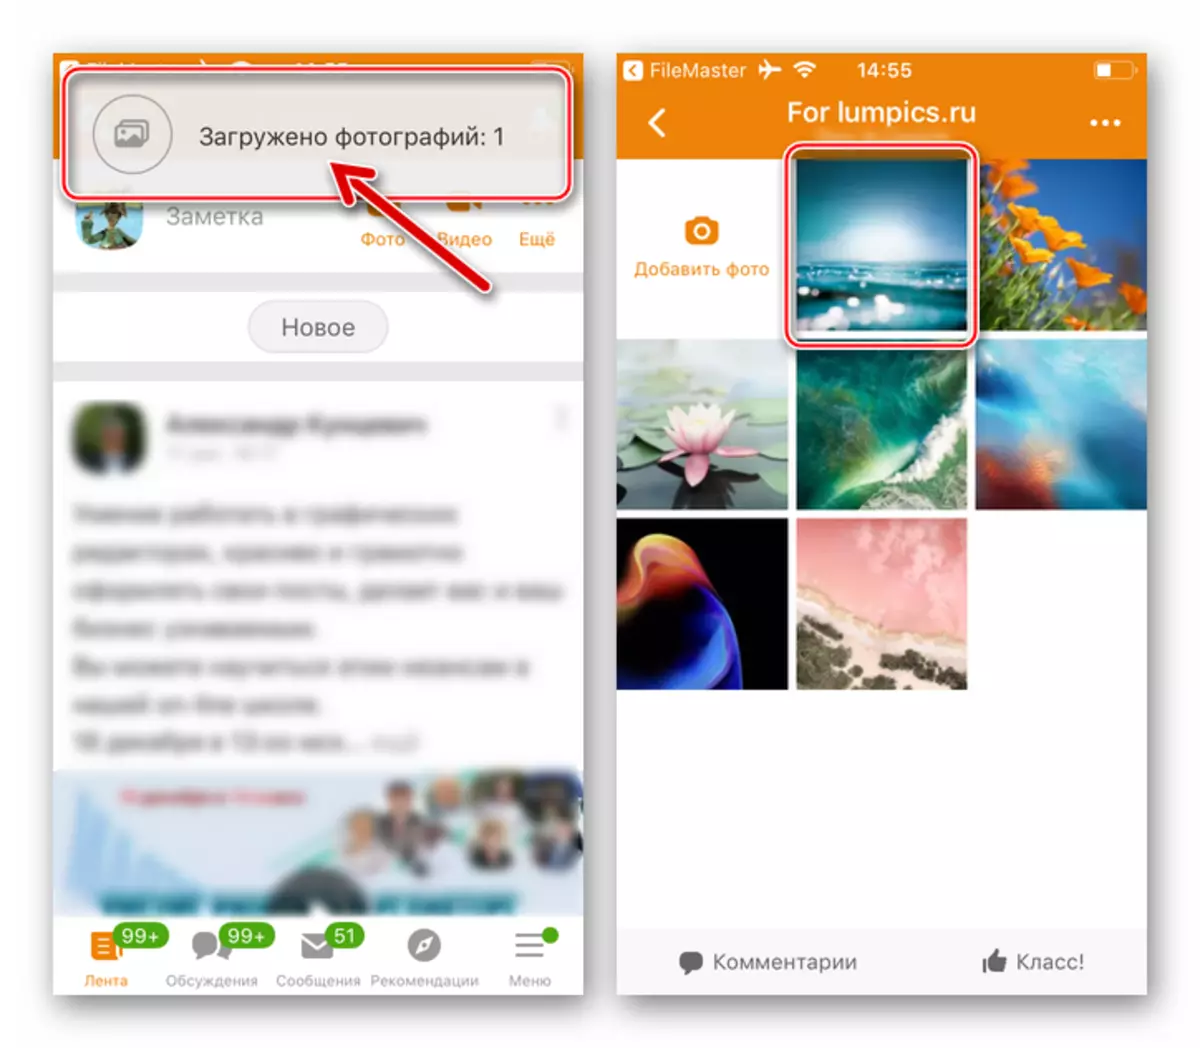 Odnoklassniki در آیفون دانلود عکس در آلبوم در شبکه اجتماعی از مدیر فایل تکمیل شده است